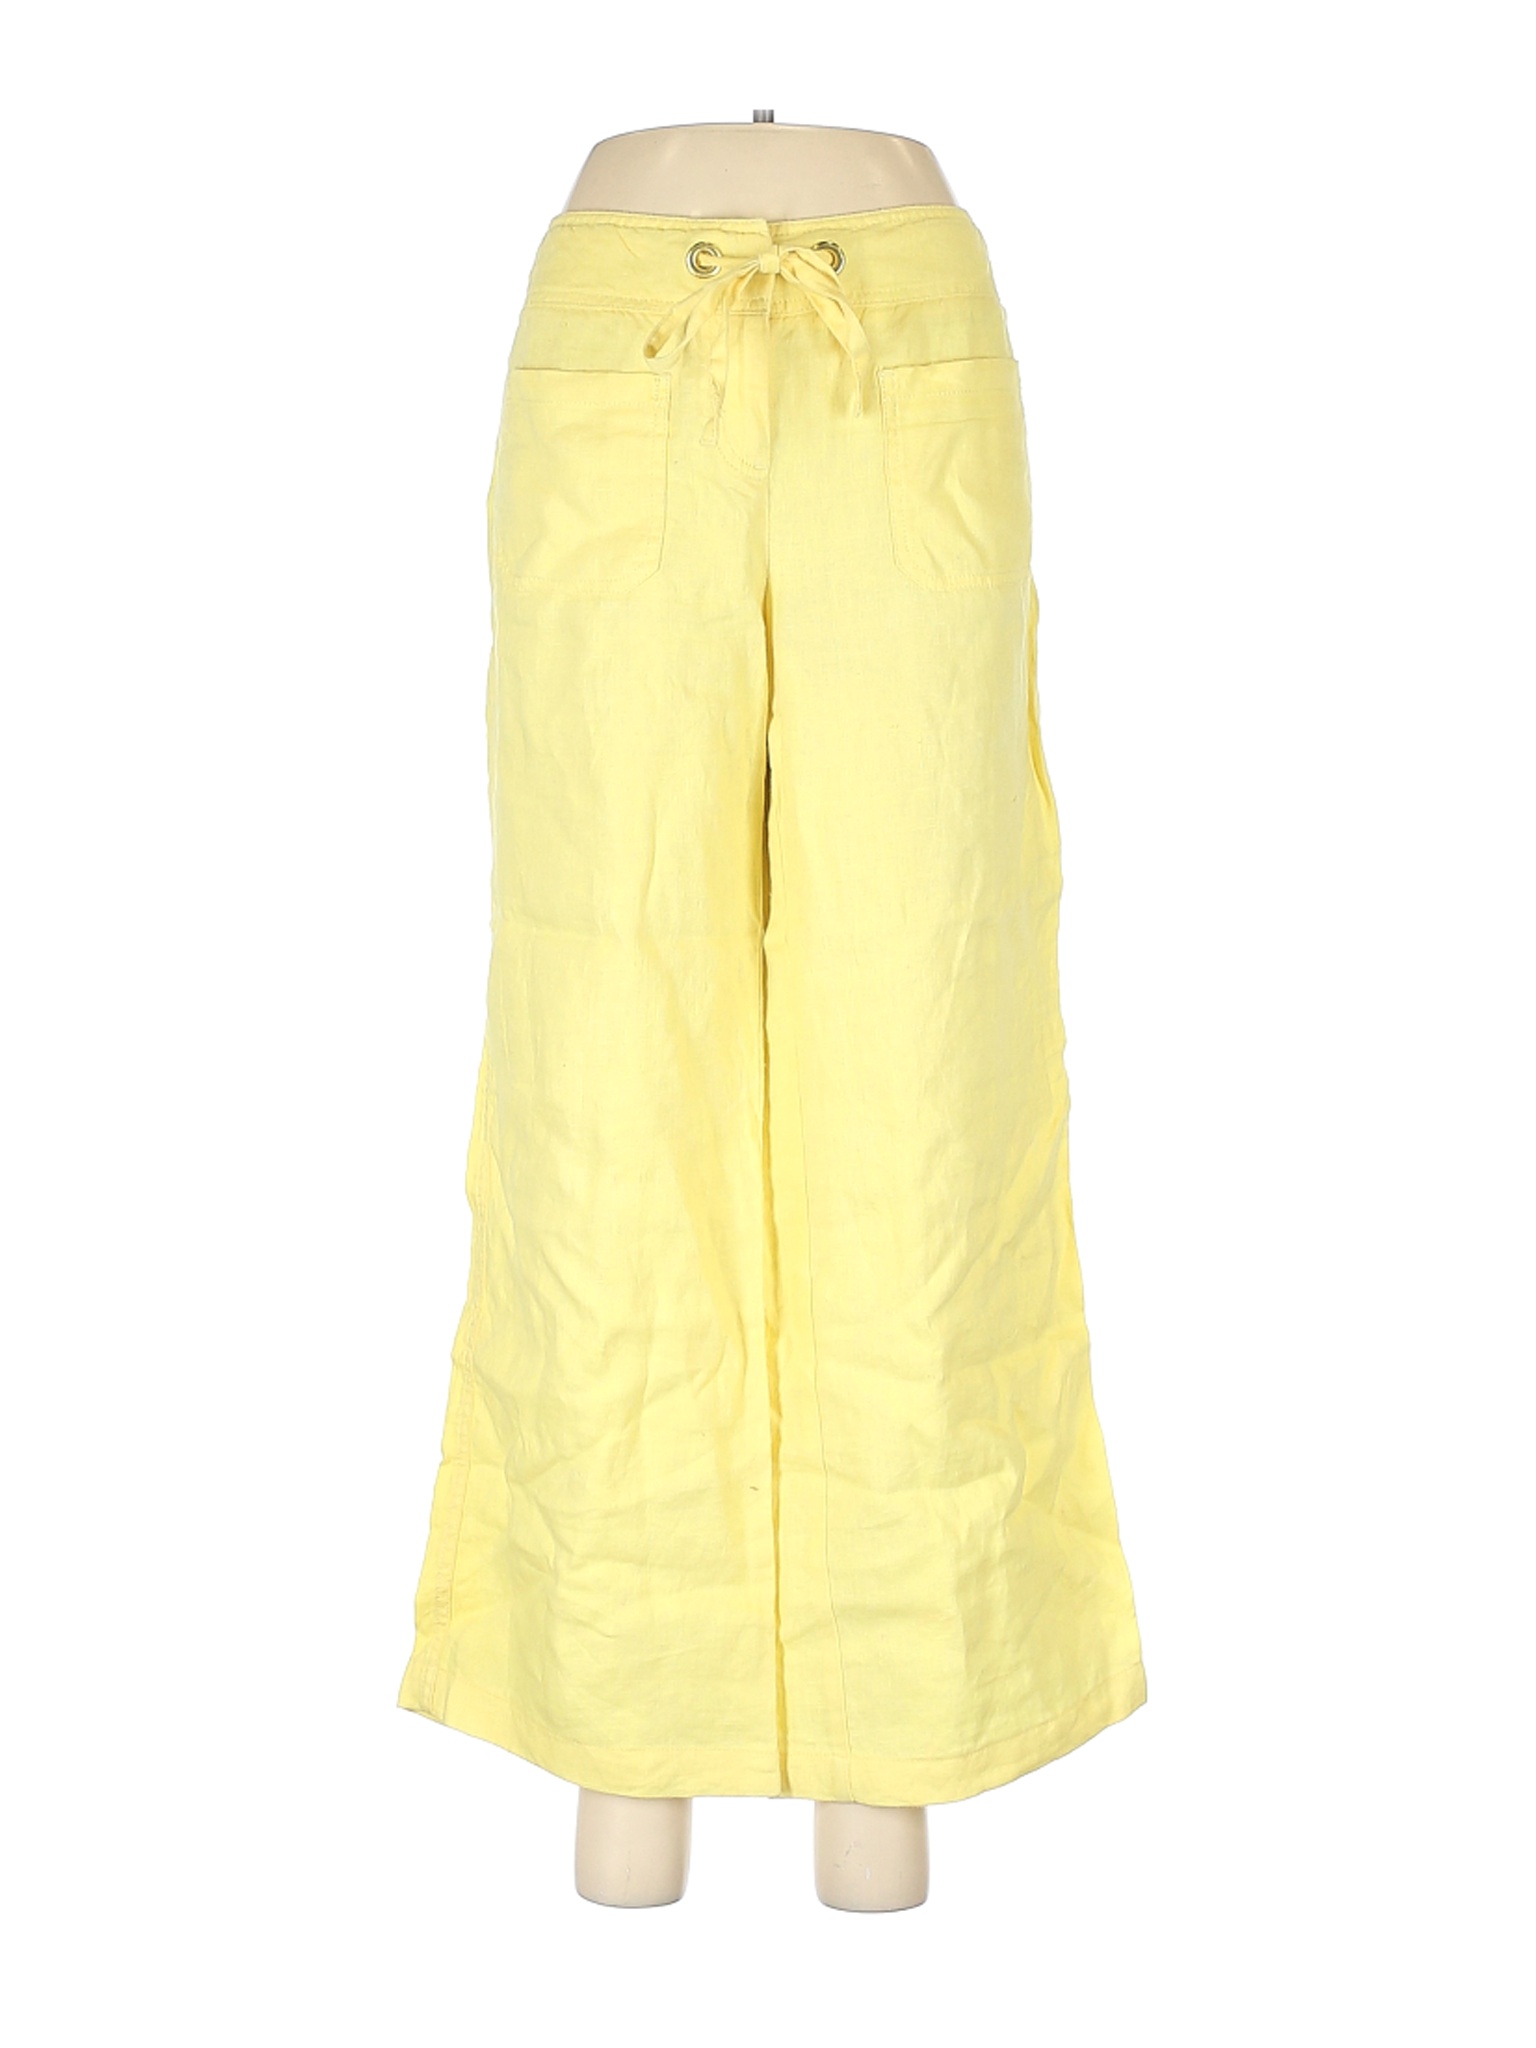 INC International Concepts Women Yellow Linen Pants 8 | eBay